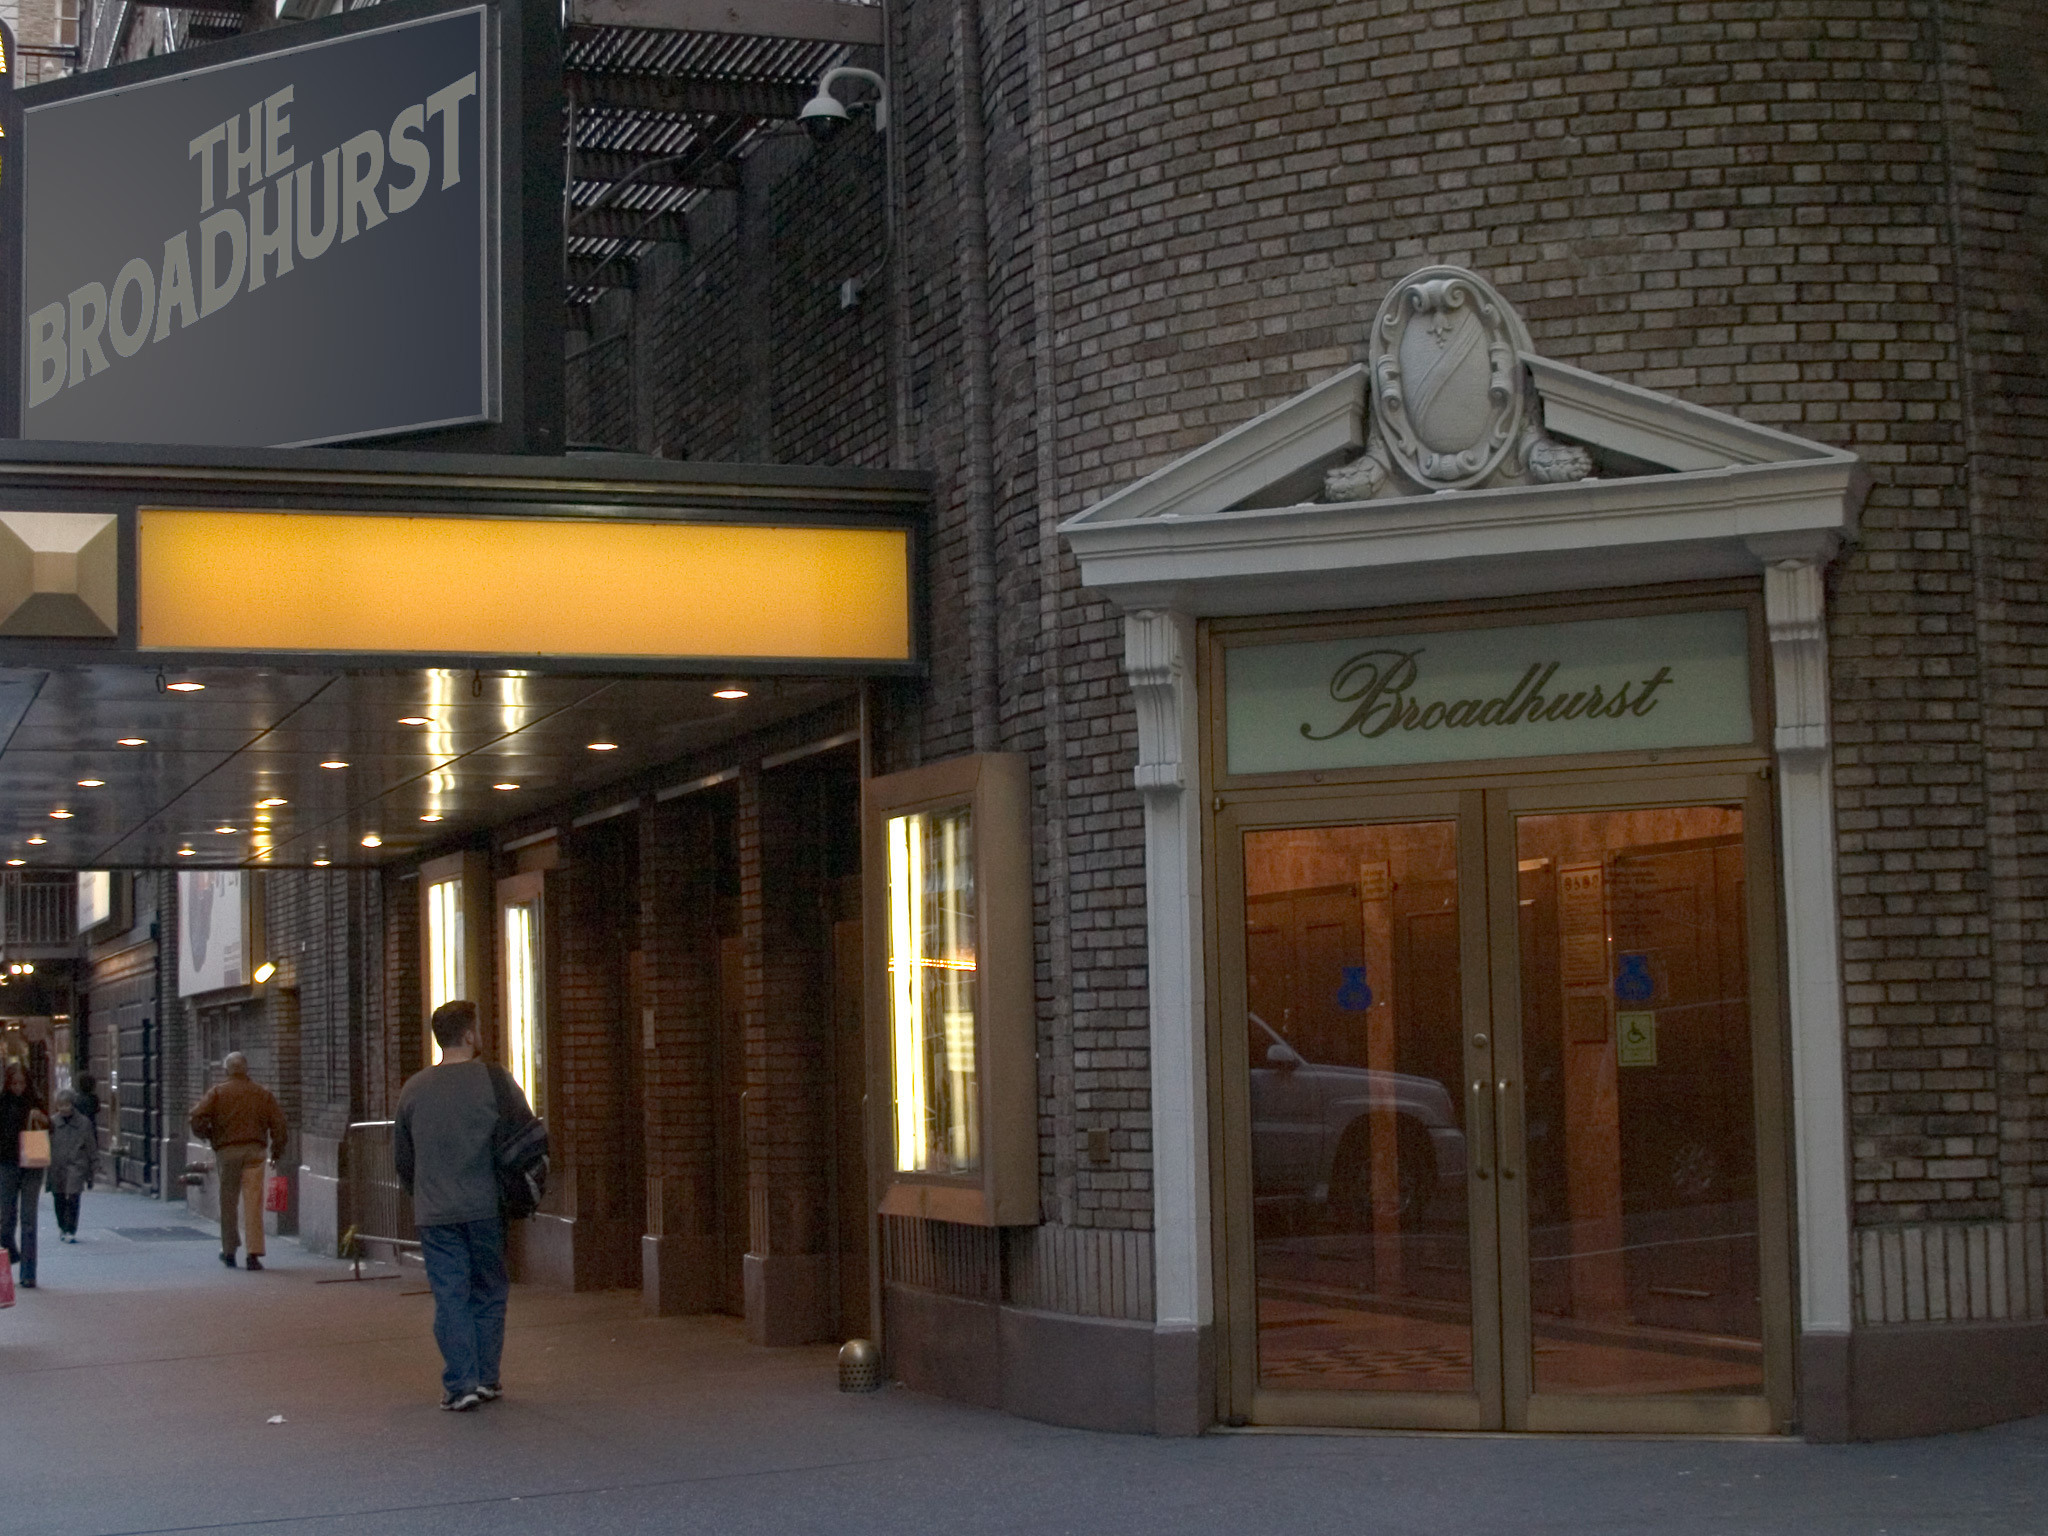 Broadhurst Theatre on Broadway in NYC